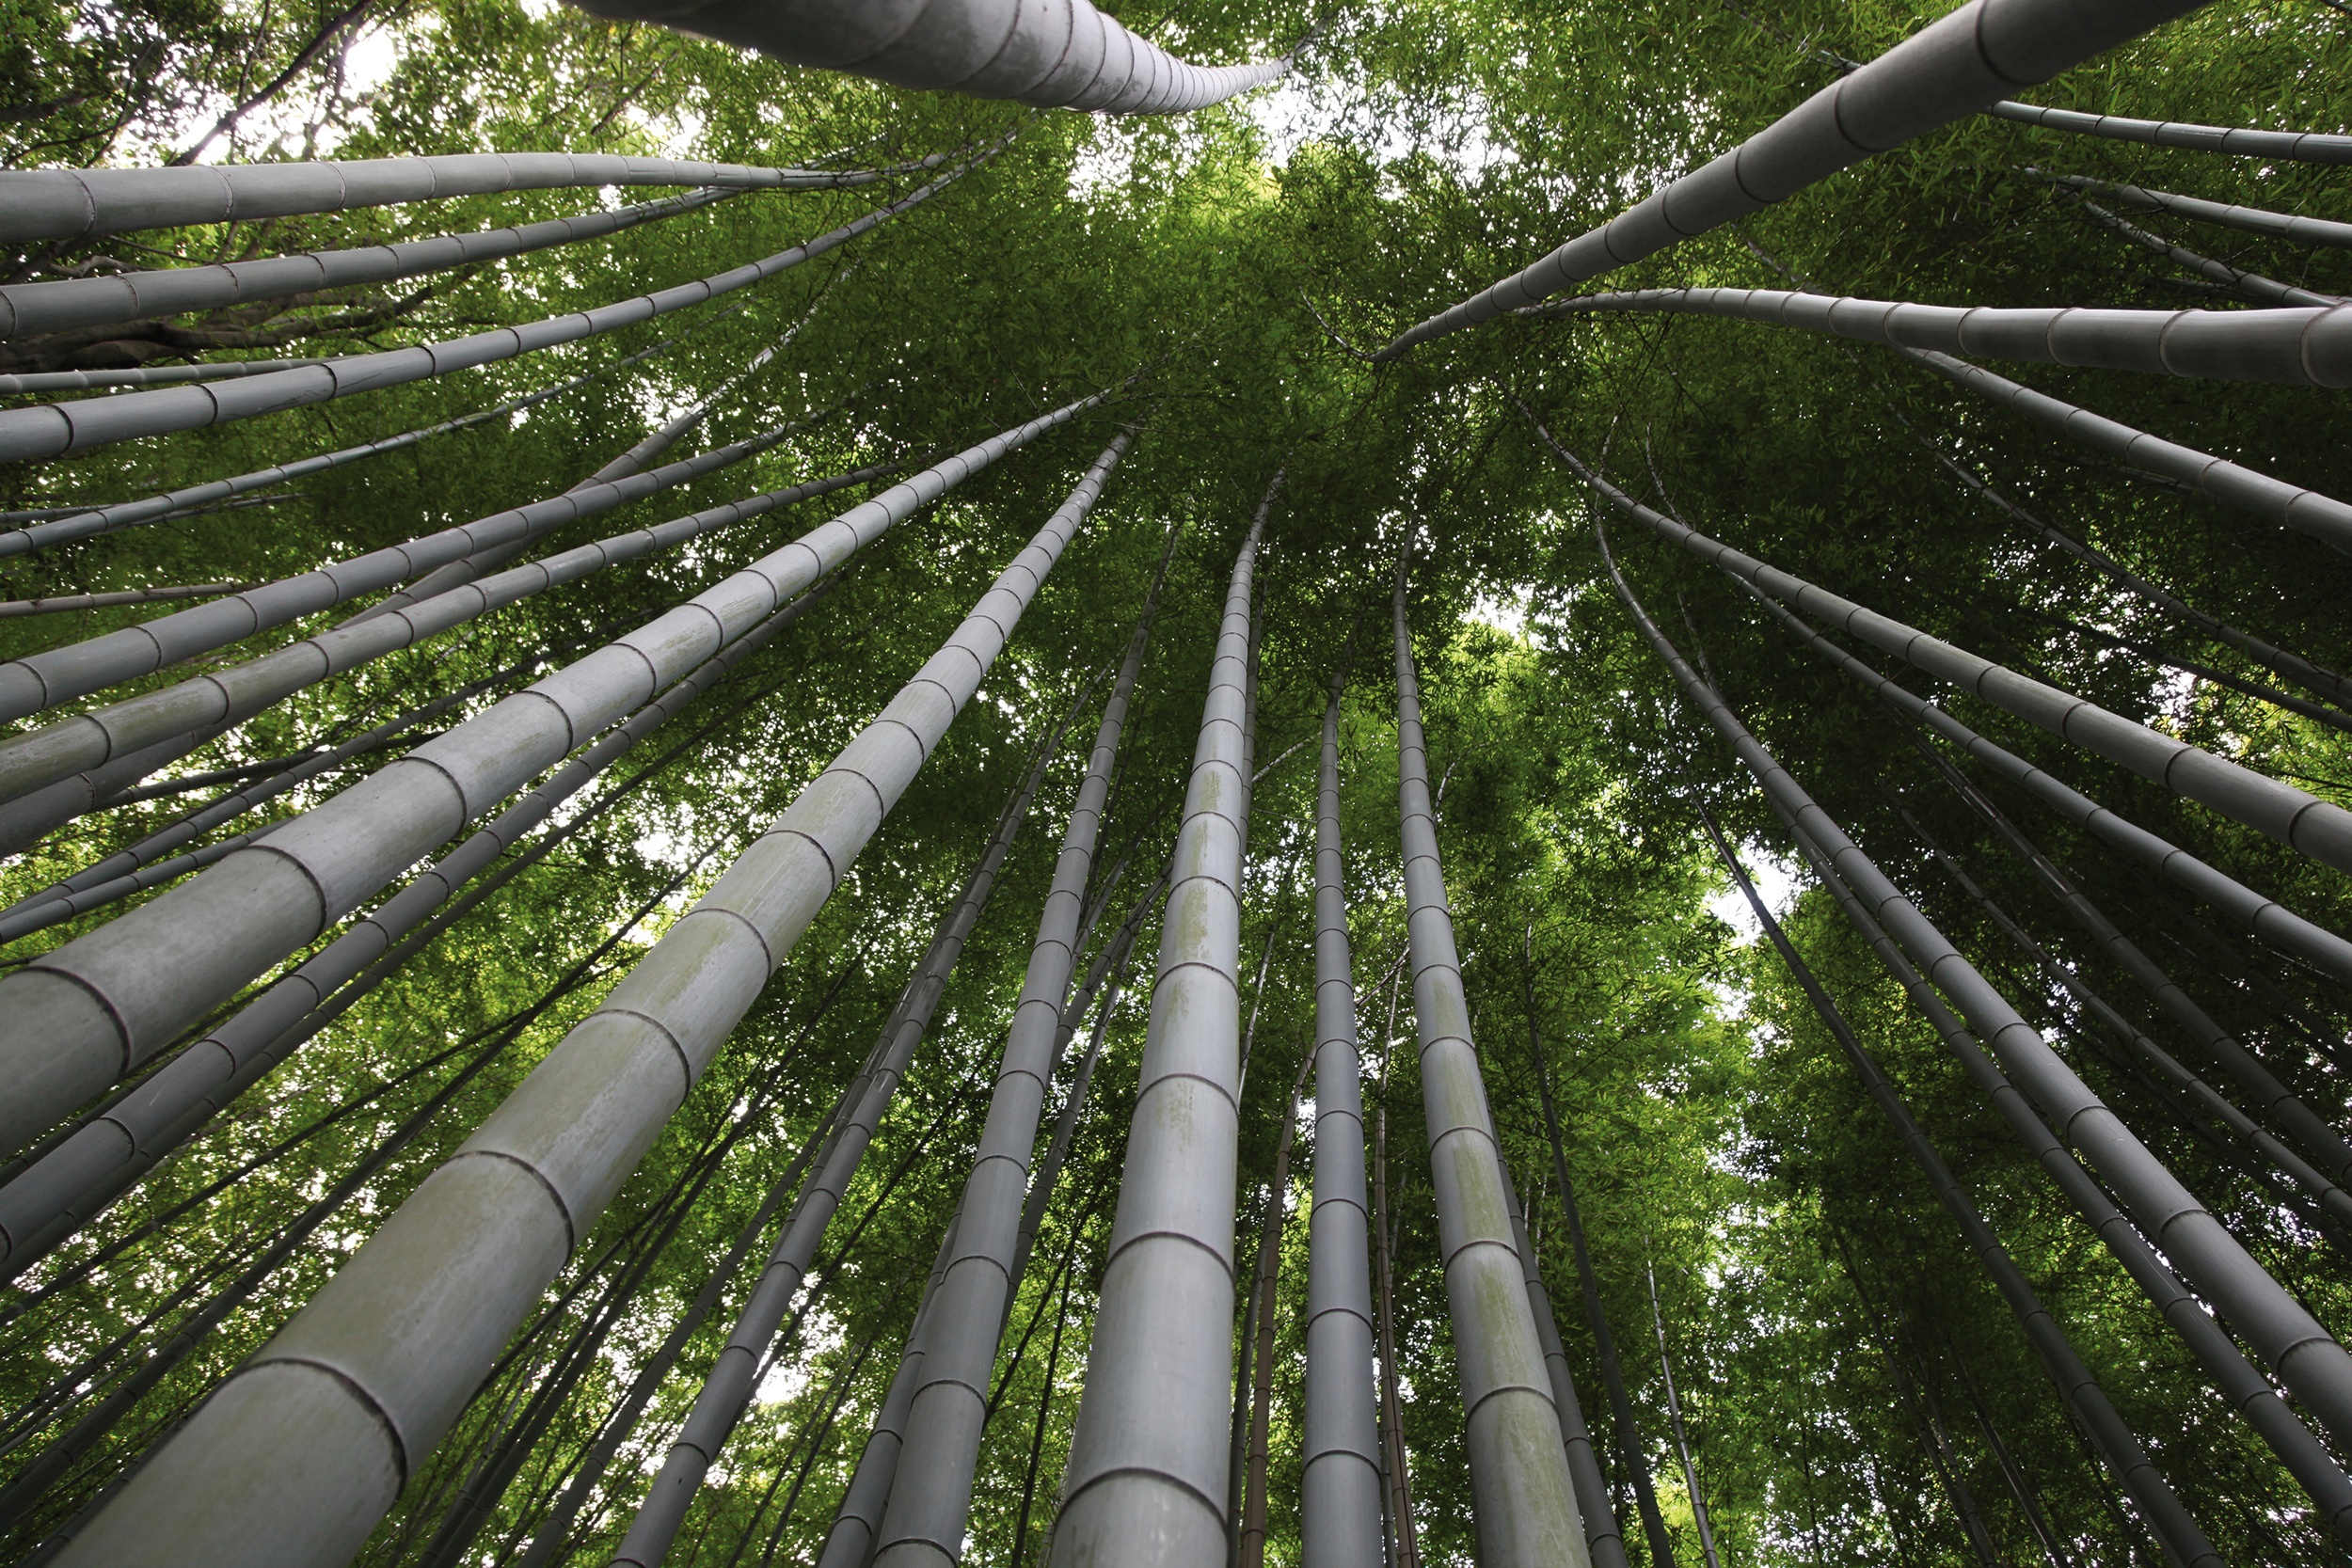 Bamboo, Bamboo uses and benefits, Bamboo sustainability